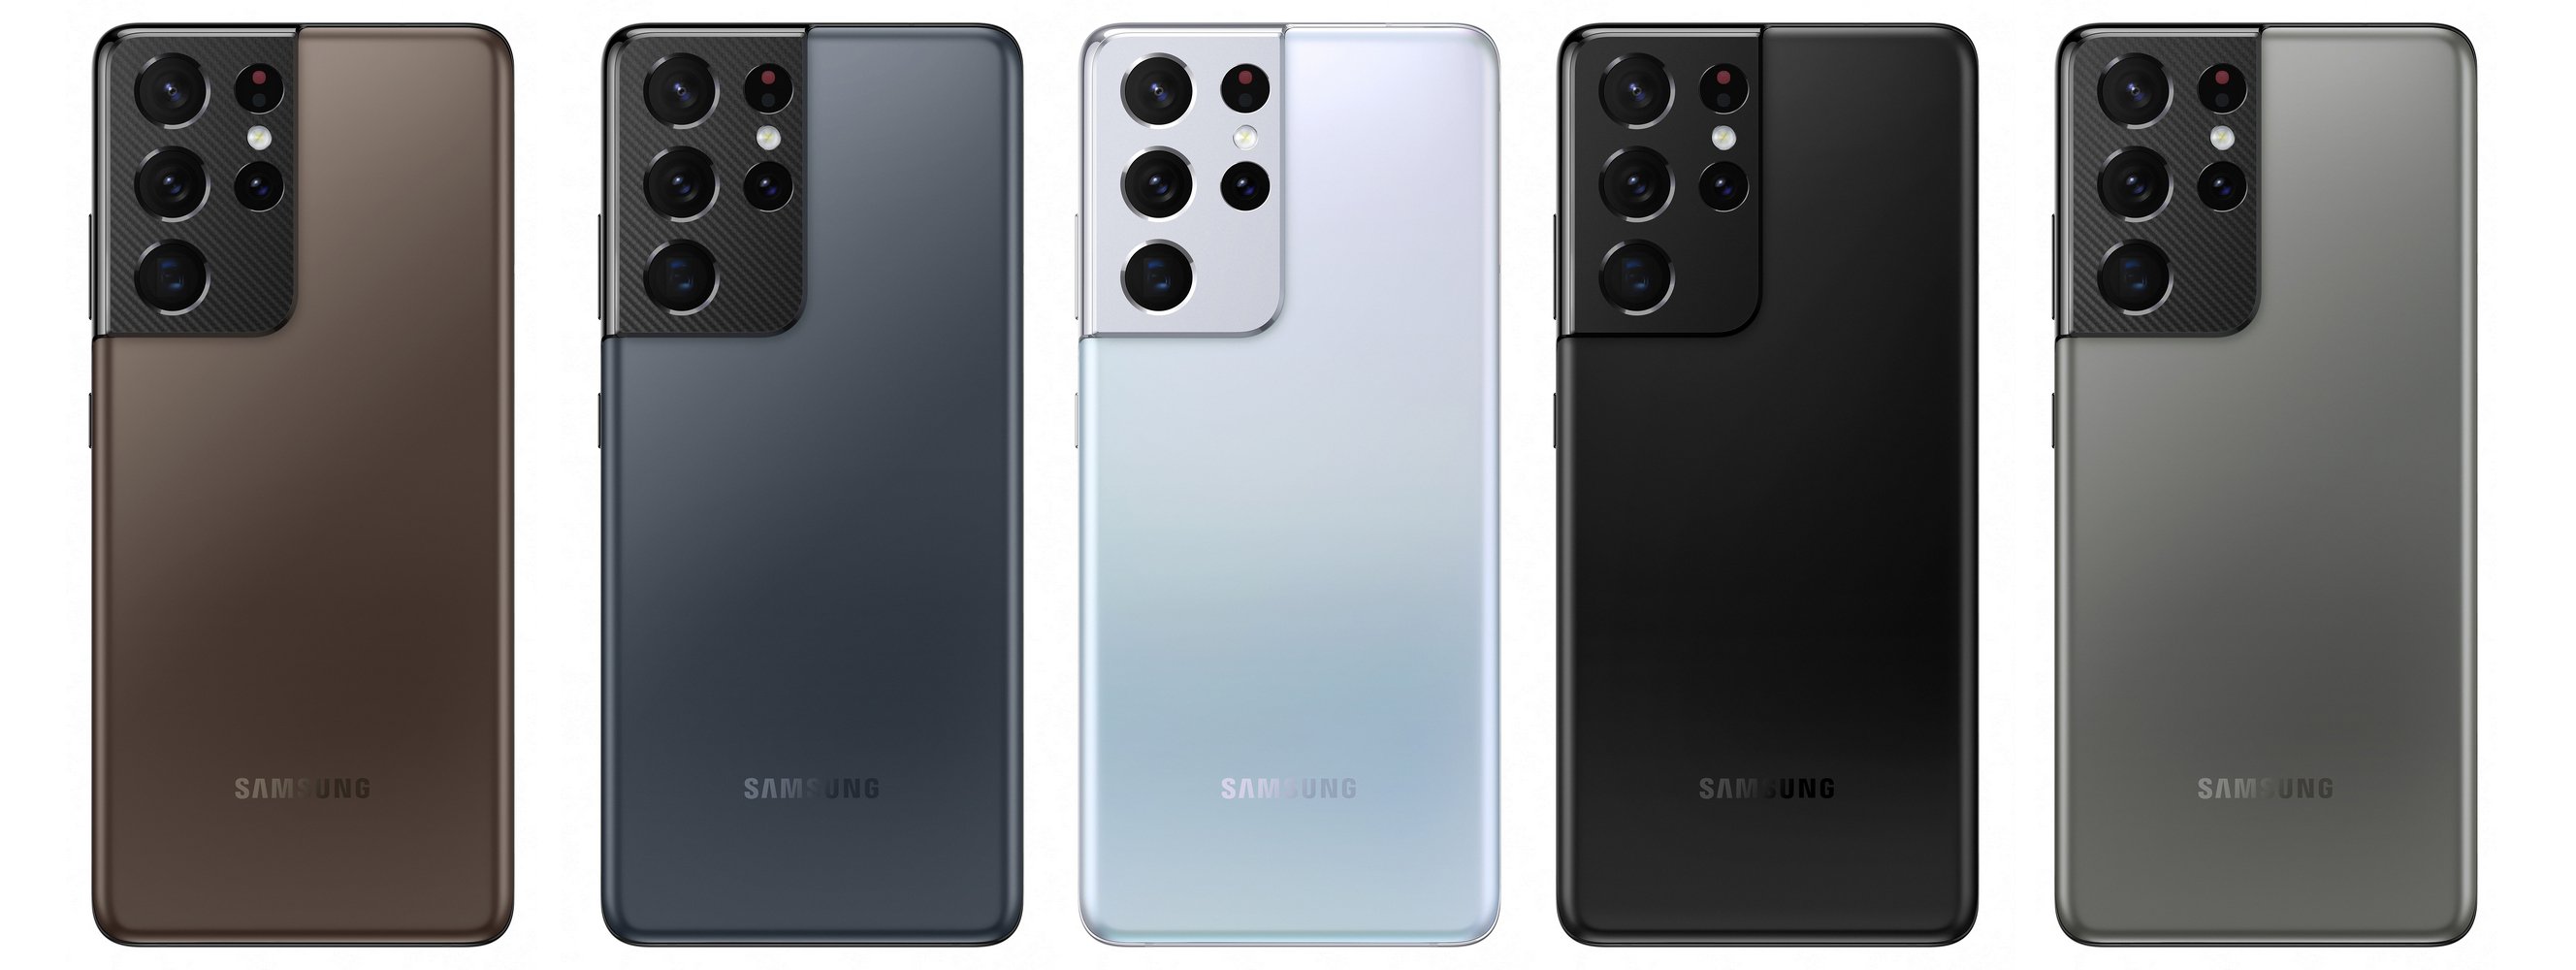 Samsung Galaxy S21 Ultra 5G - характеристики, мнения, ревю, цена